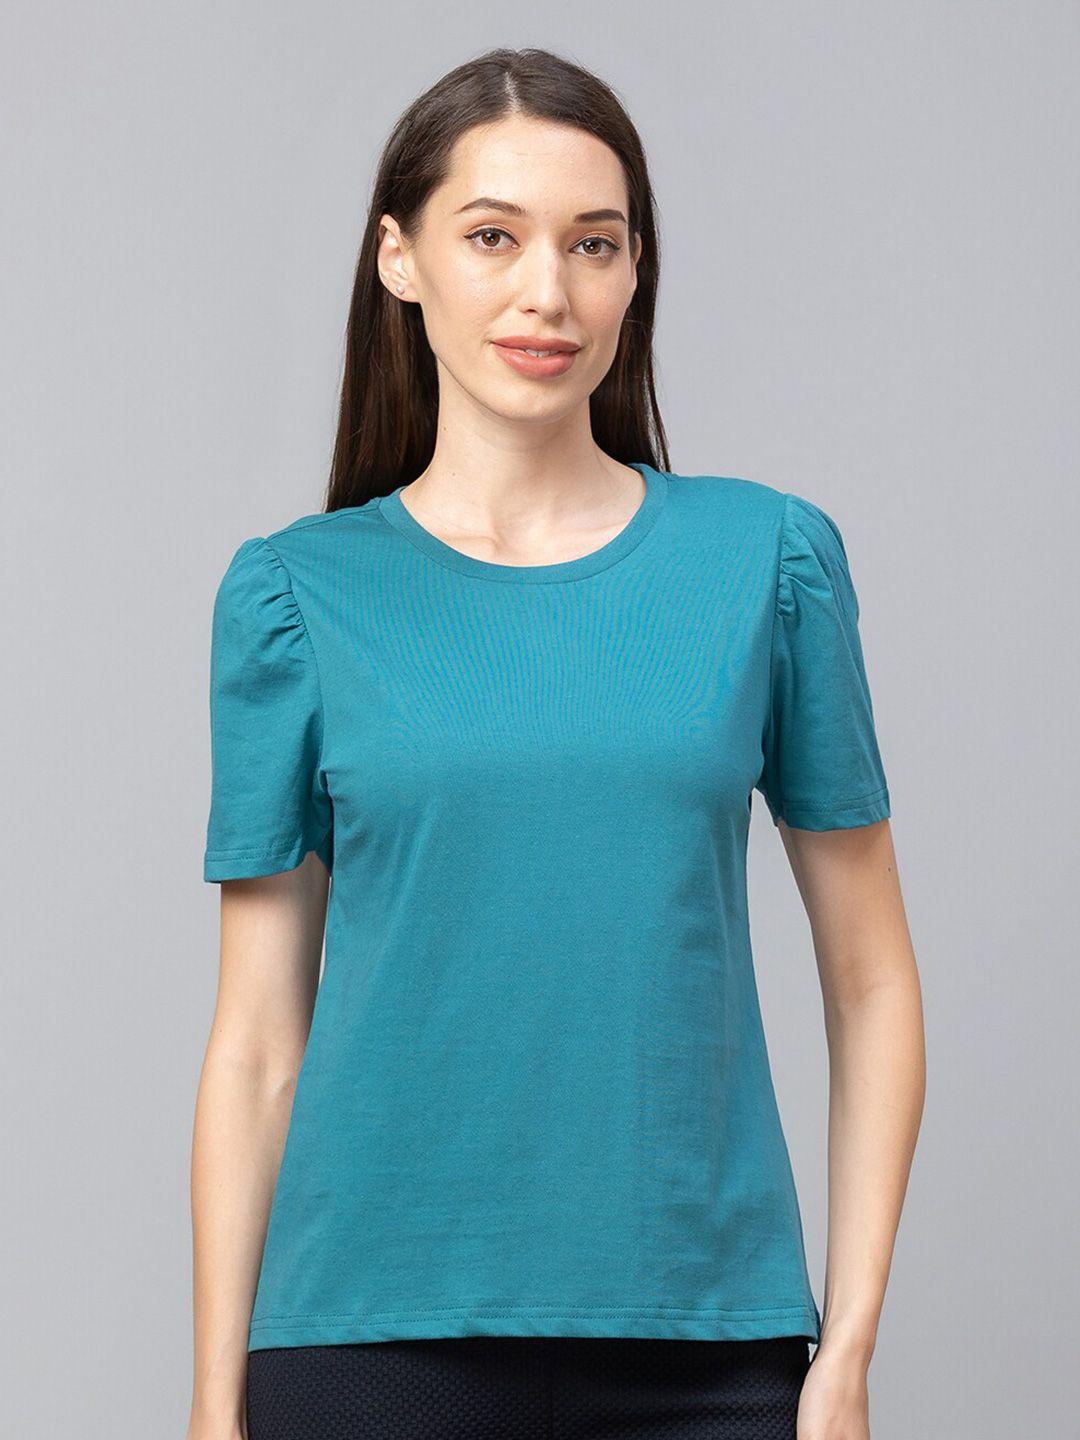 globus-women-blue-t-shirt